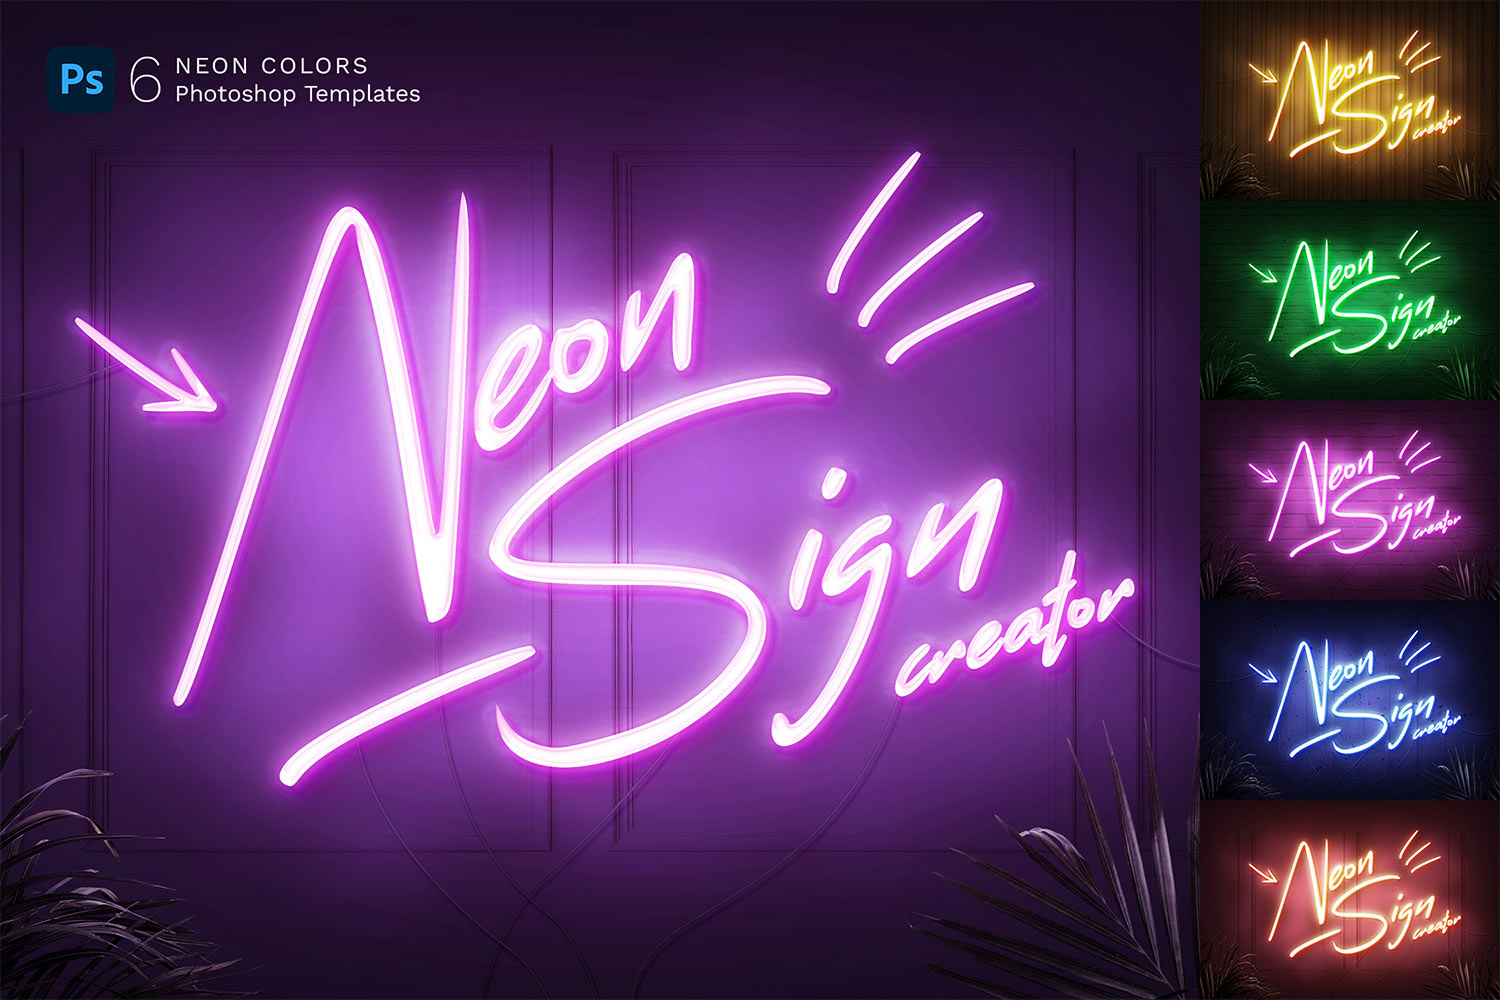 Neon Sign Photoshop Templates